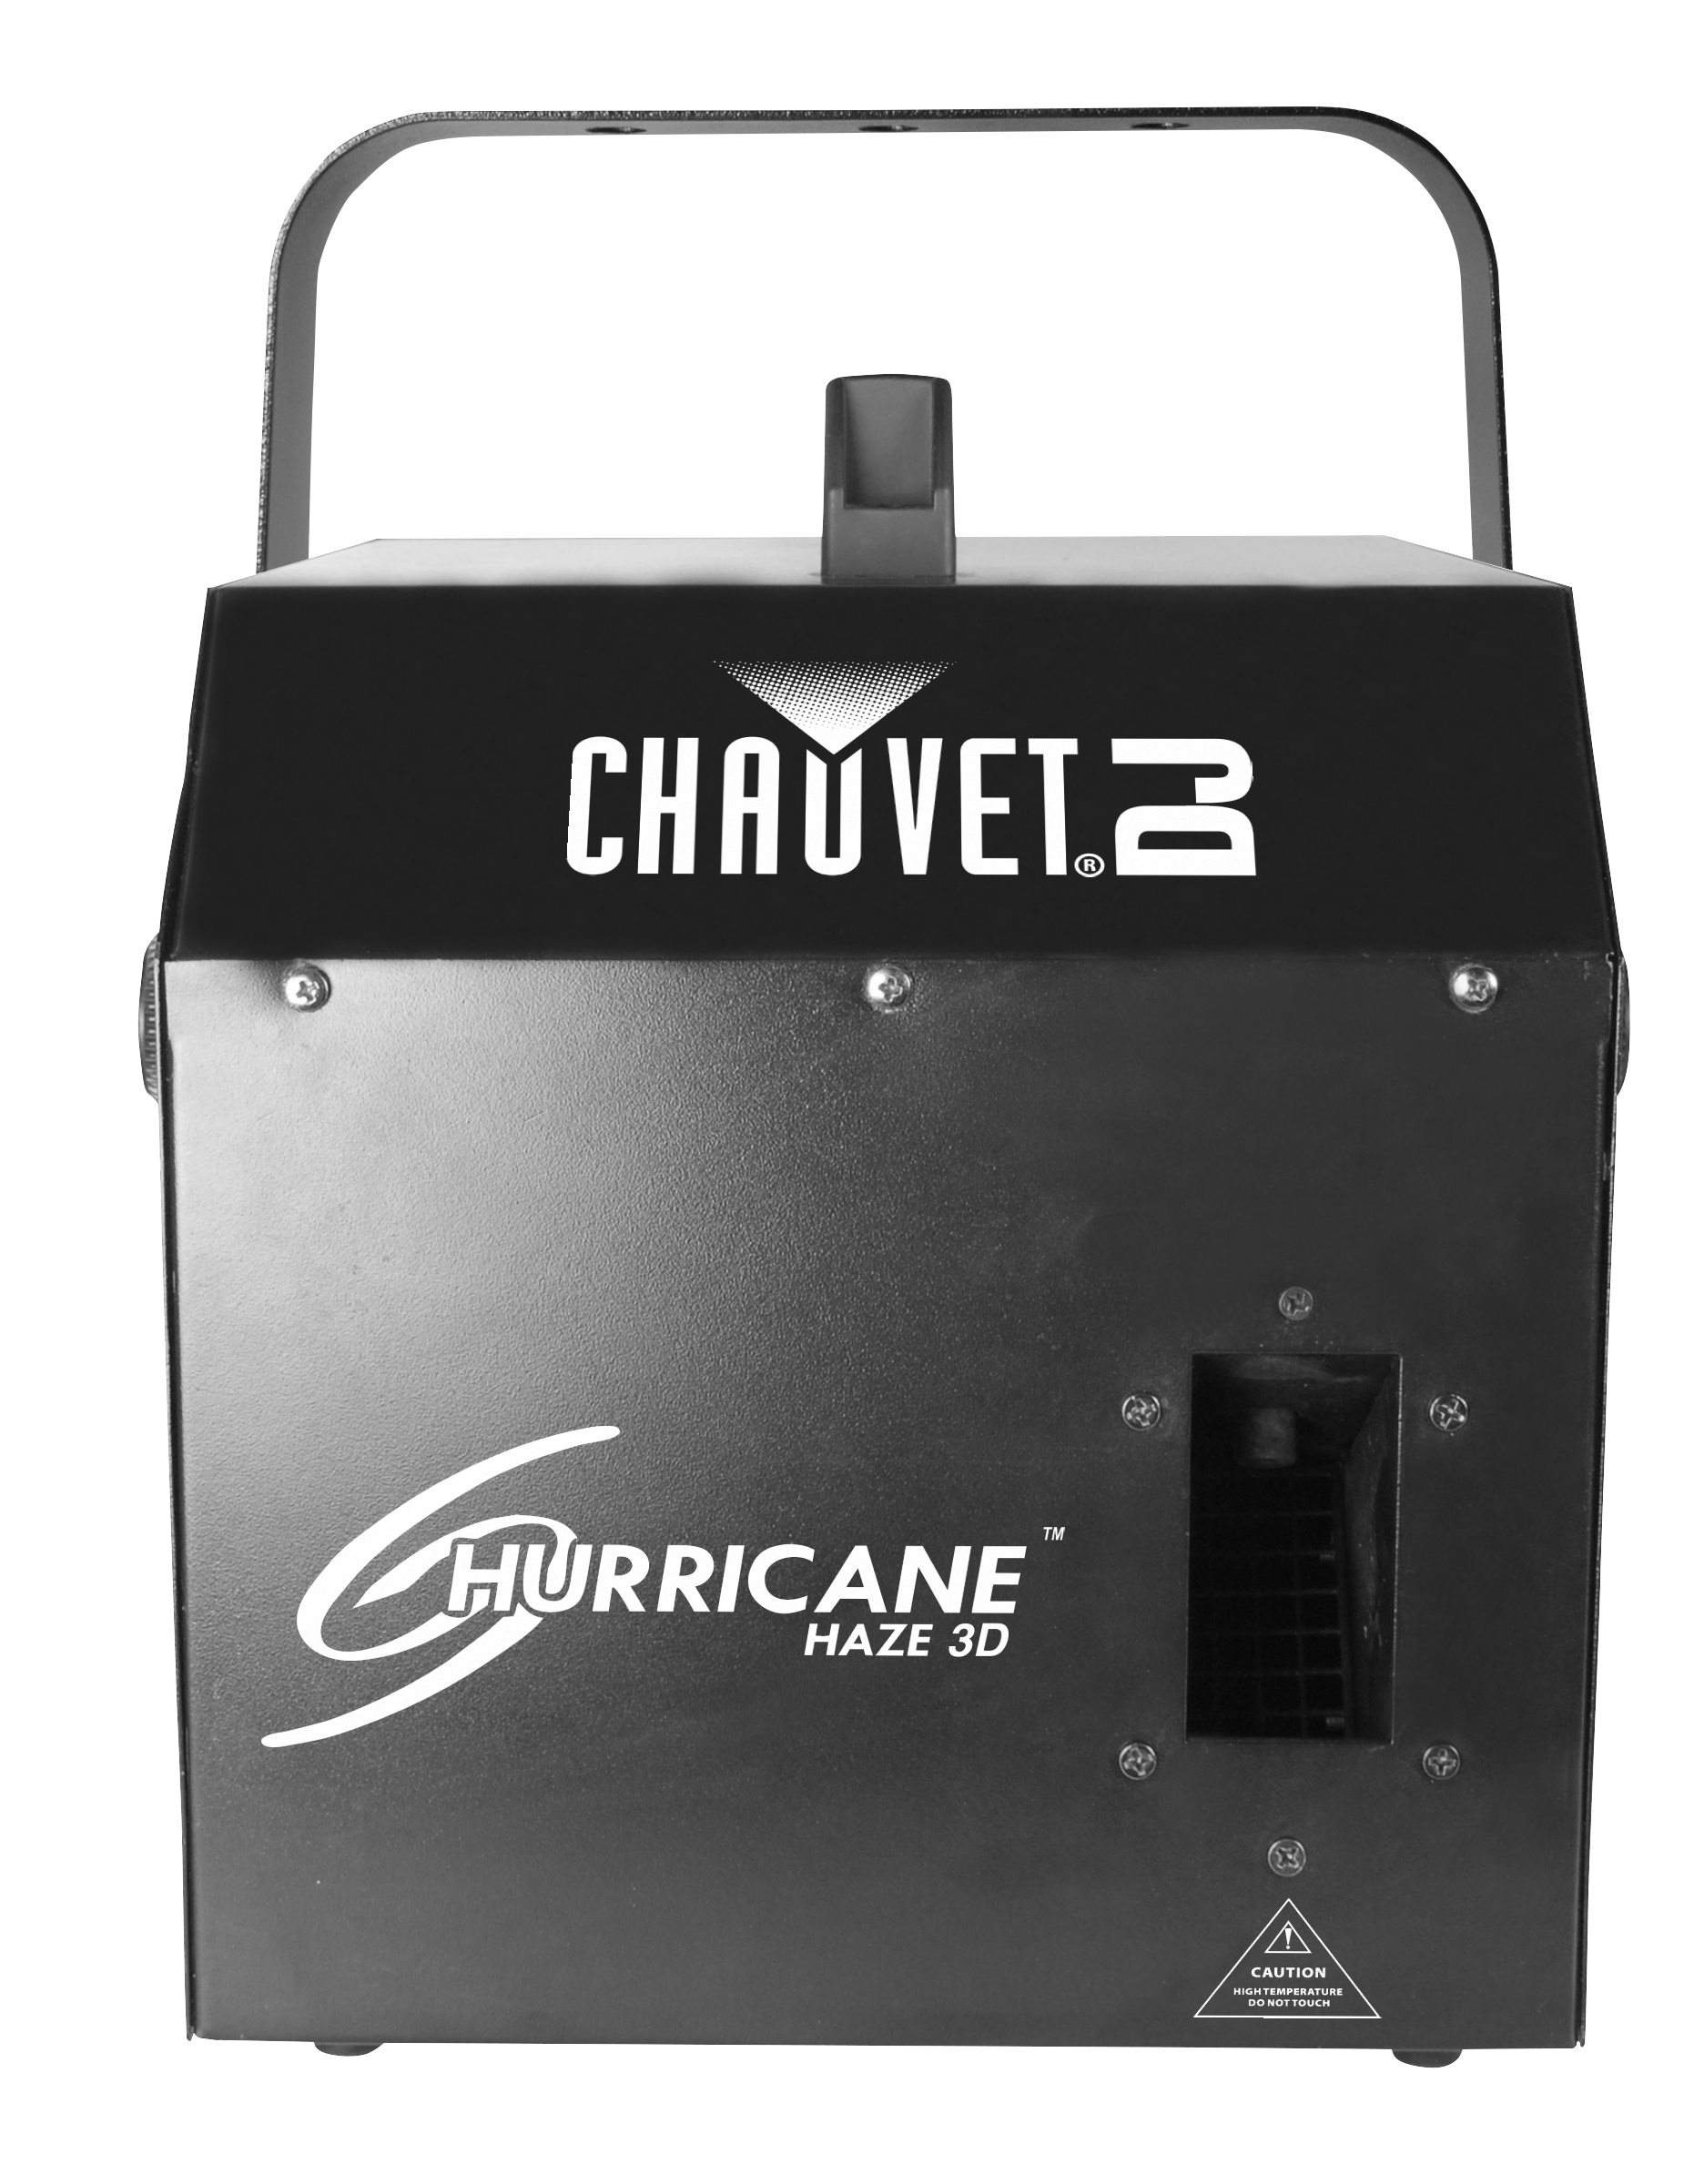 Chauvet Hurricane Haze 3D